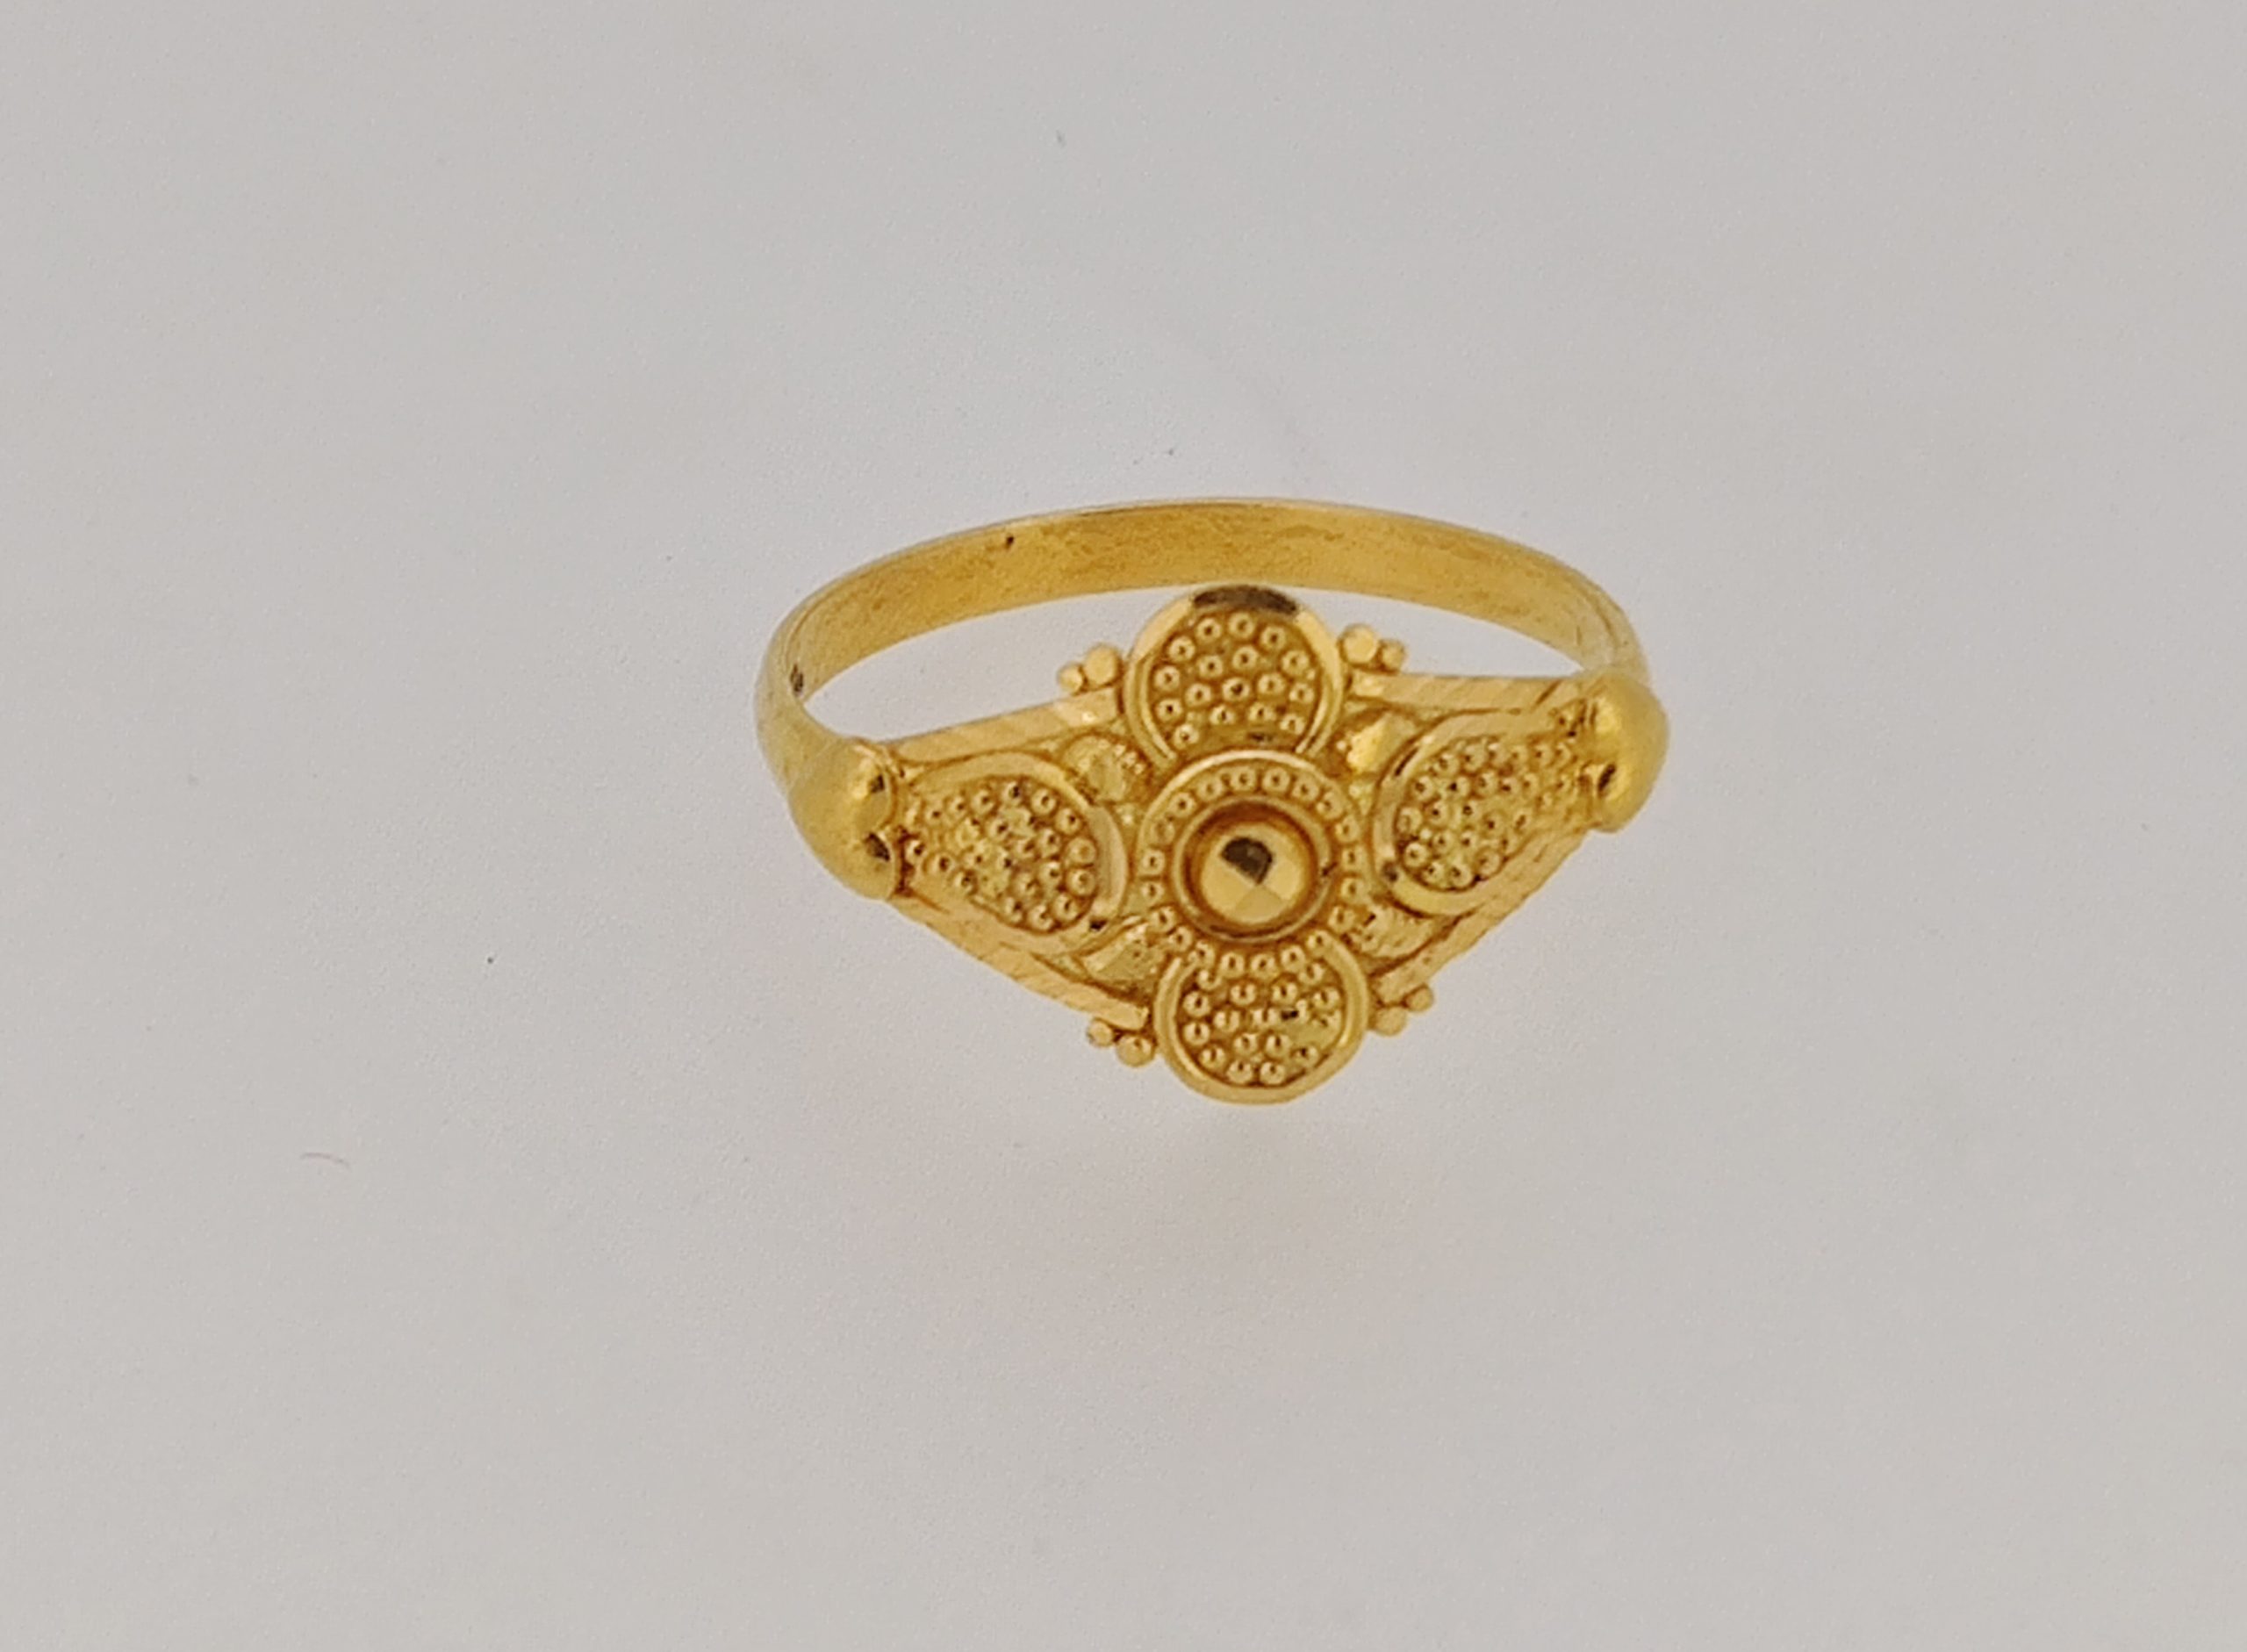 Shop Latest Gold Rings Online in India - Joyalukkas